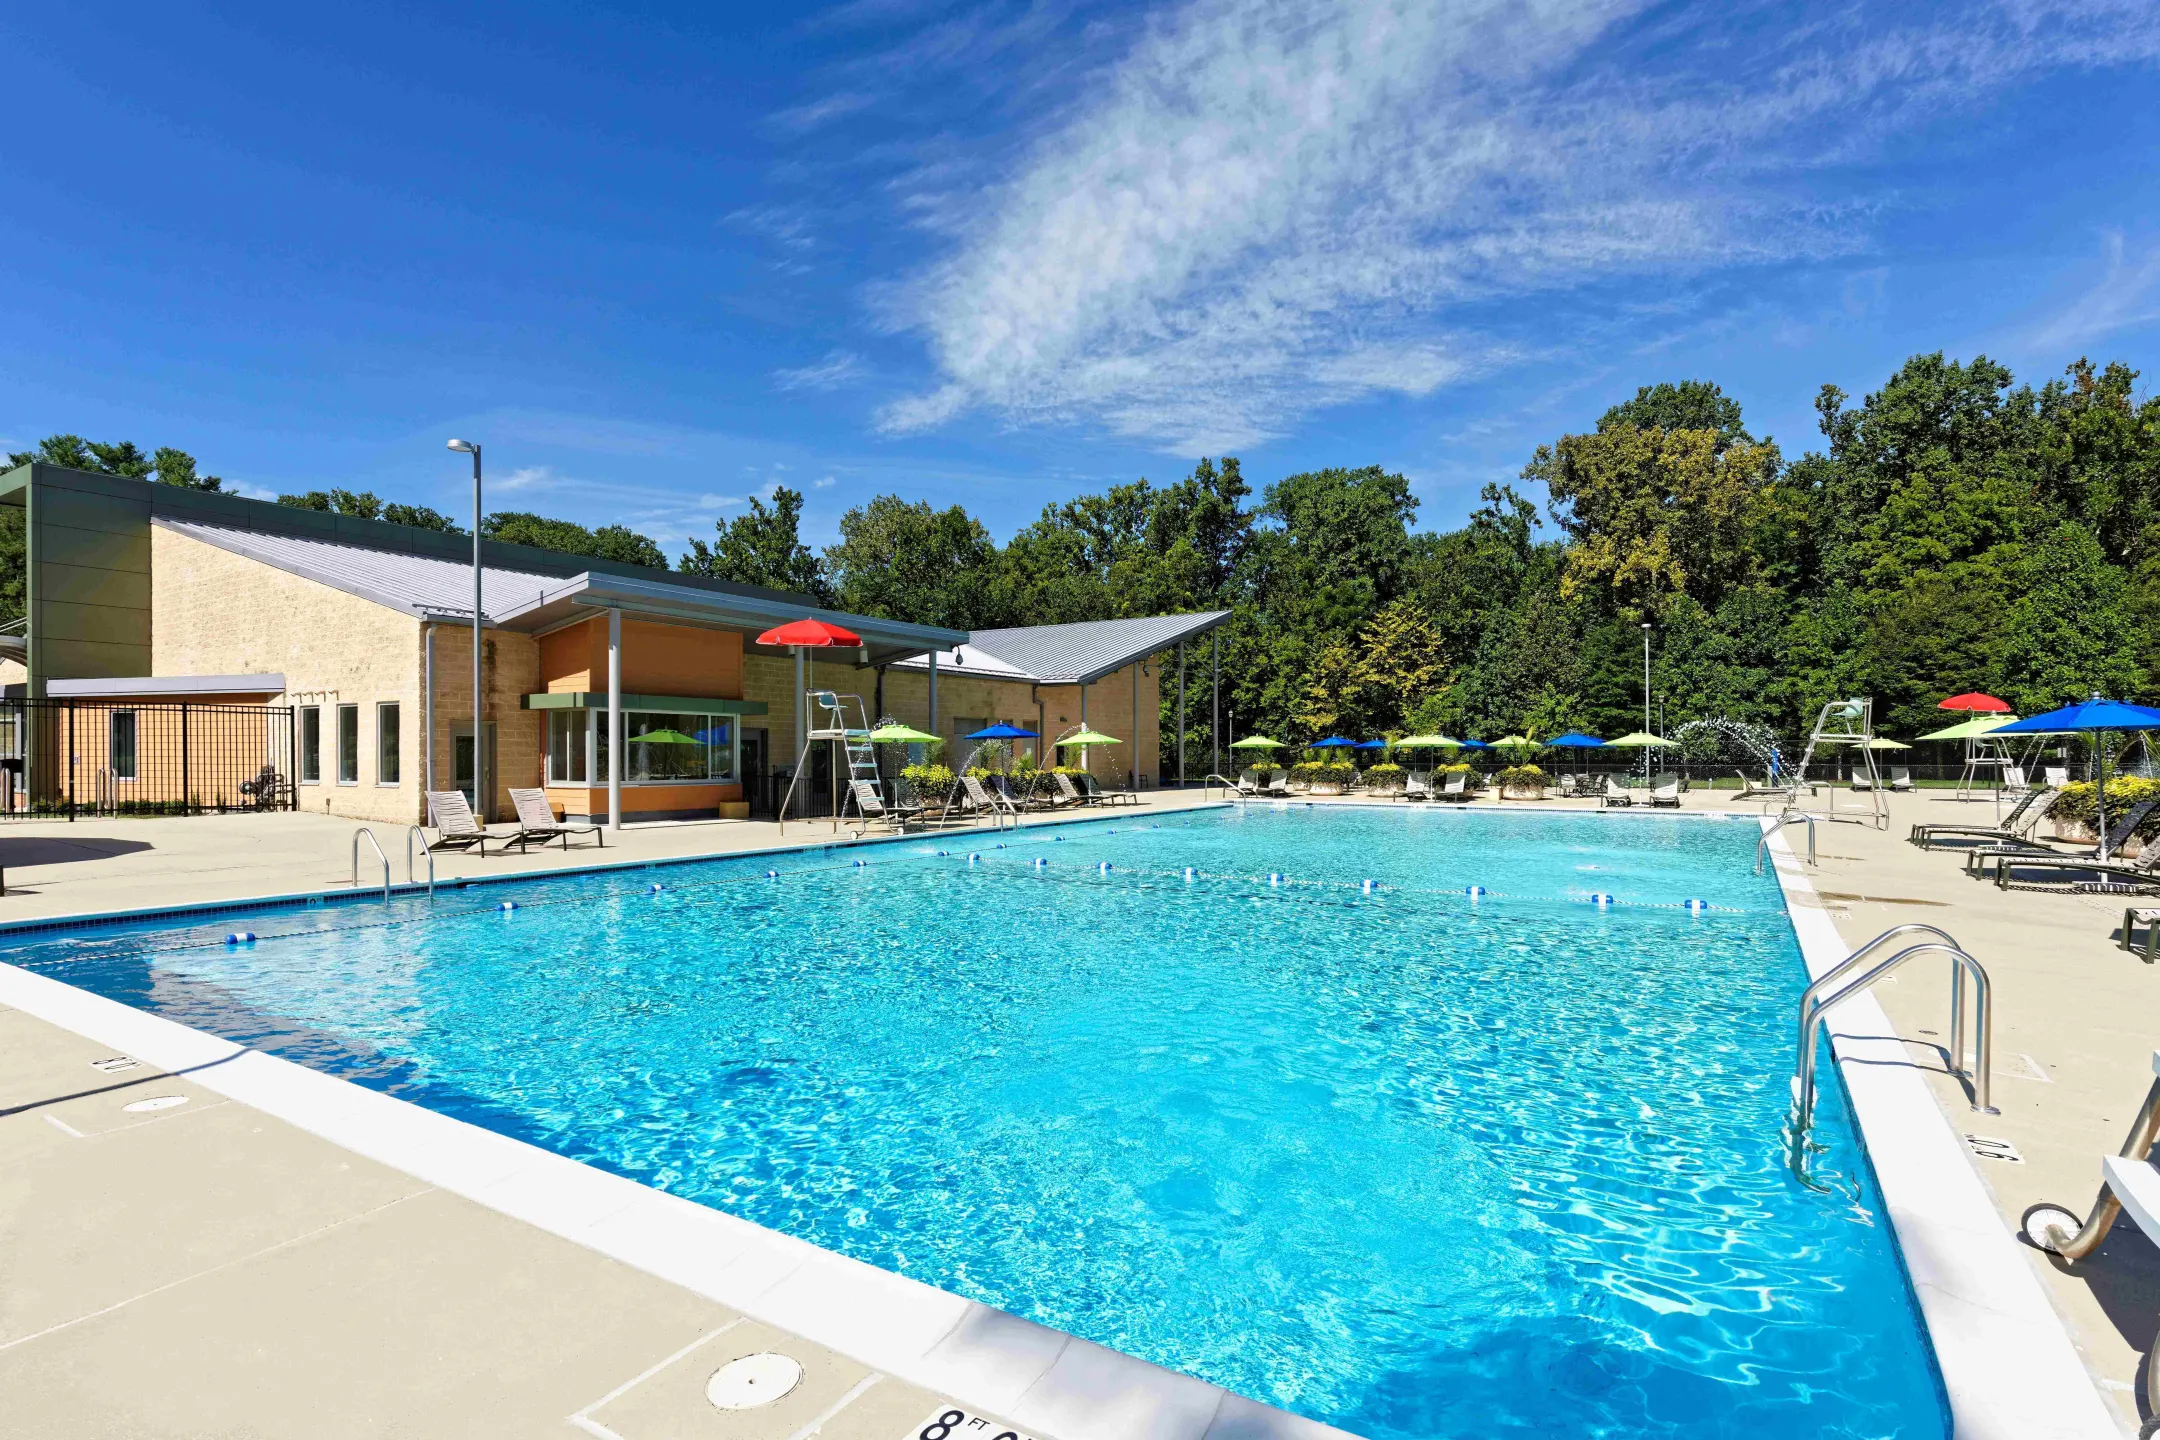 Pool - Rollins Park Apartments - Rockville, MD